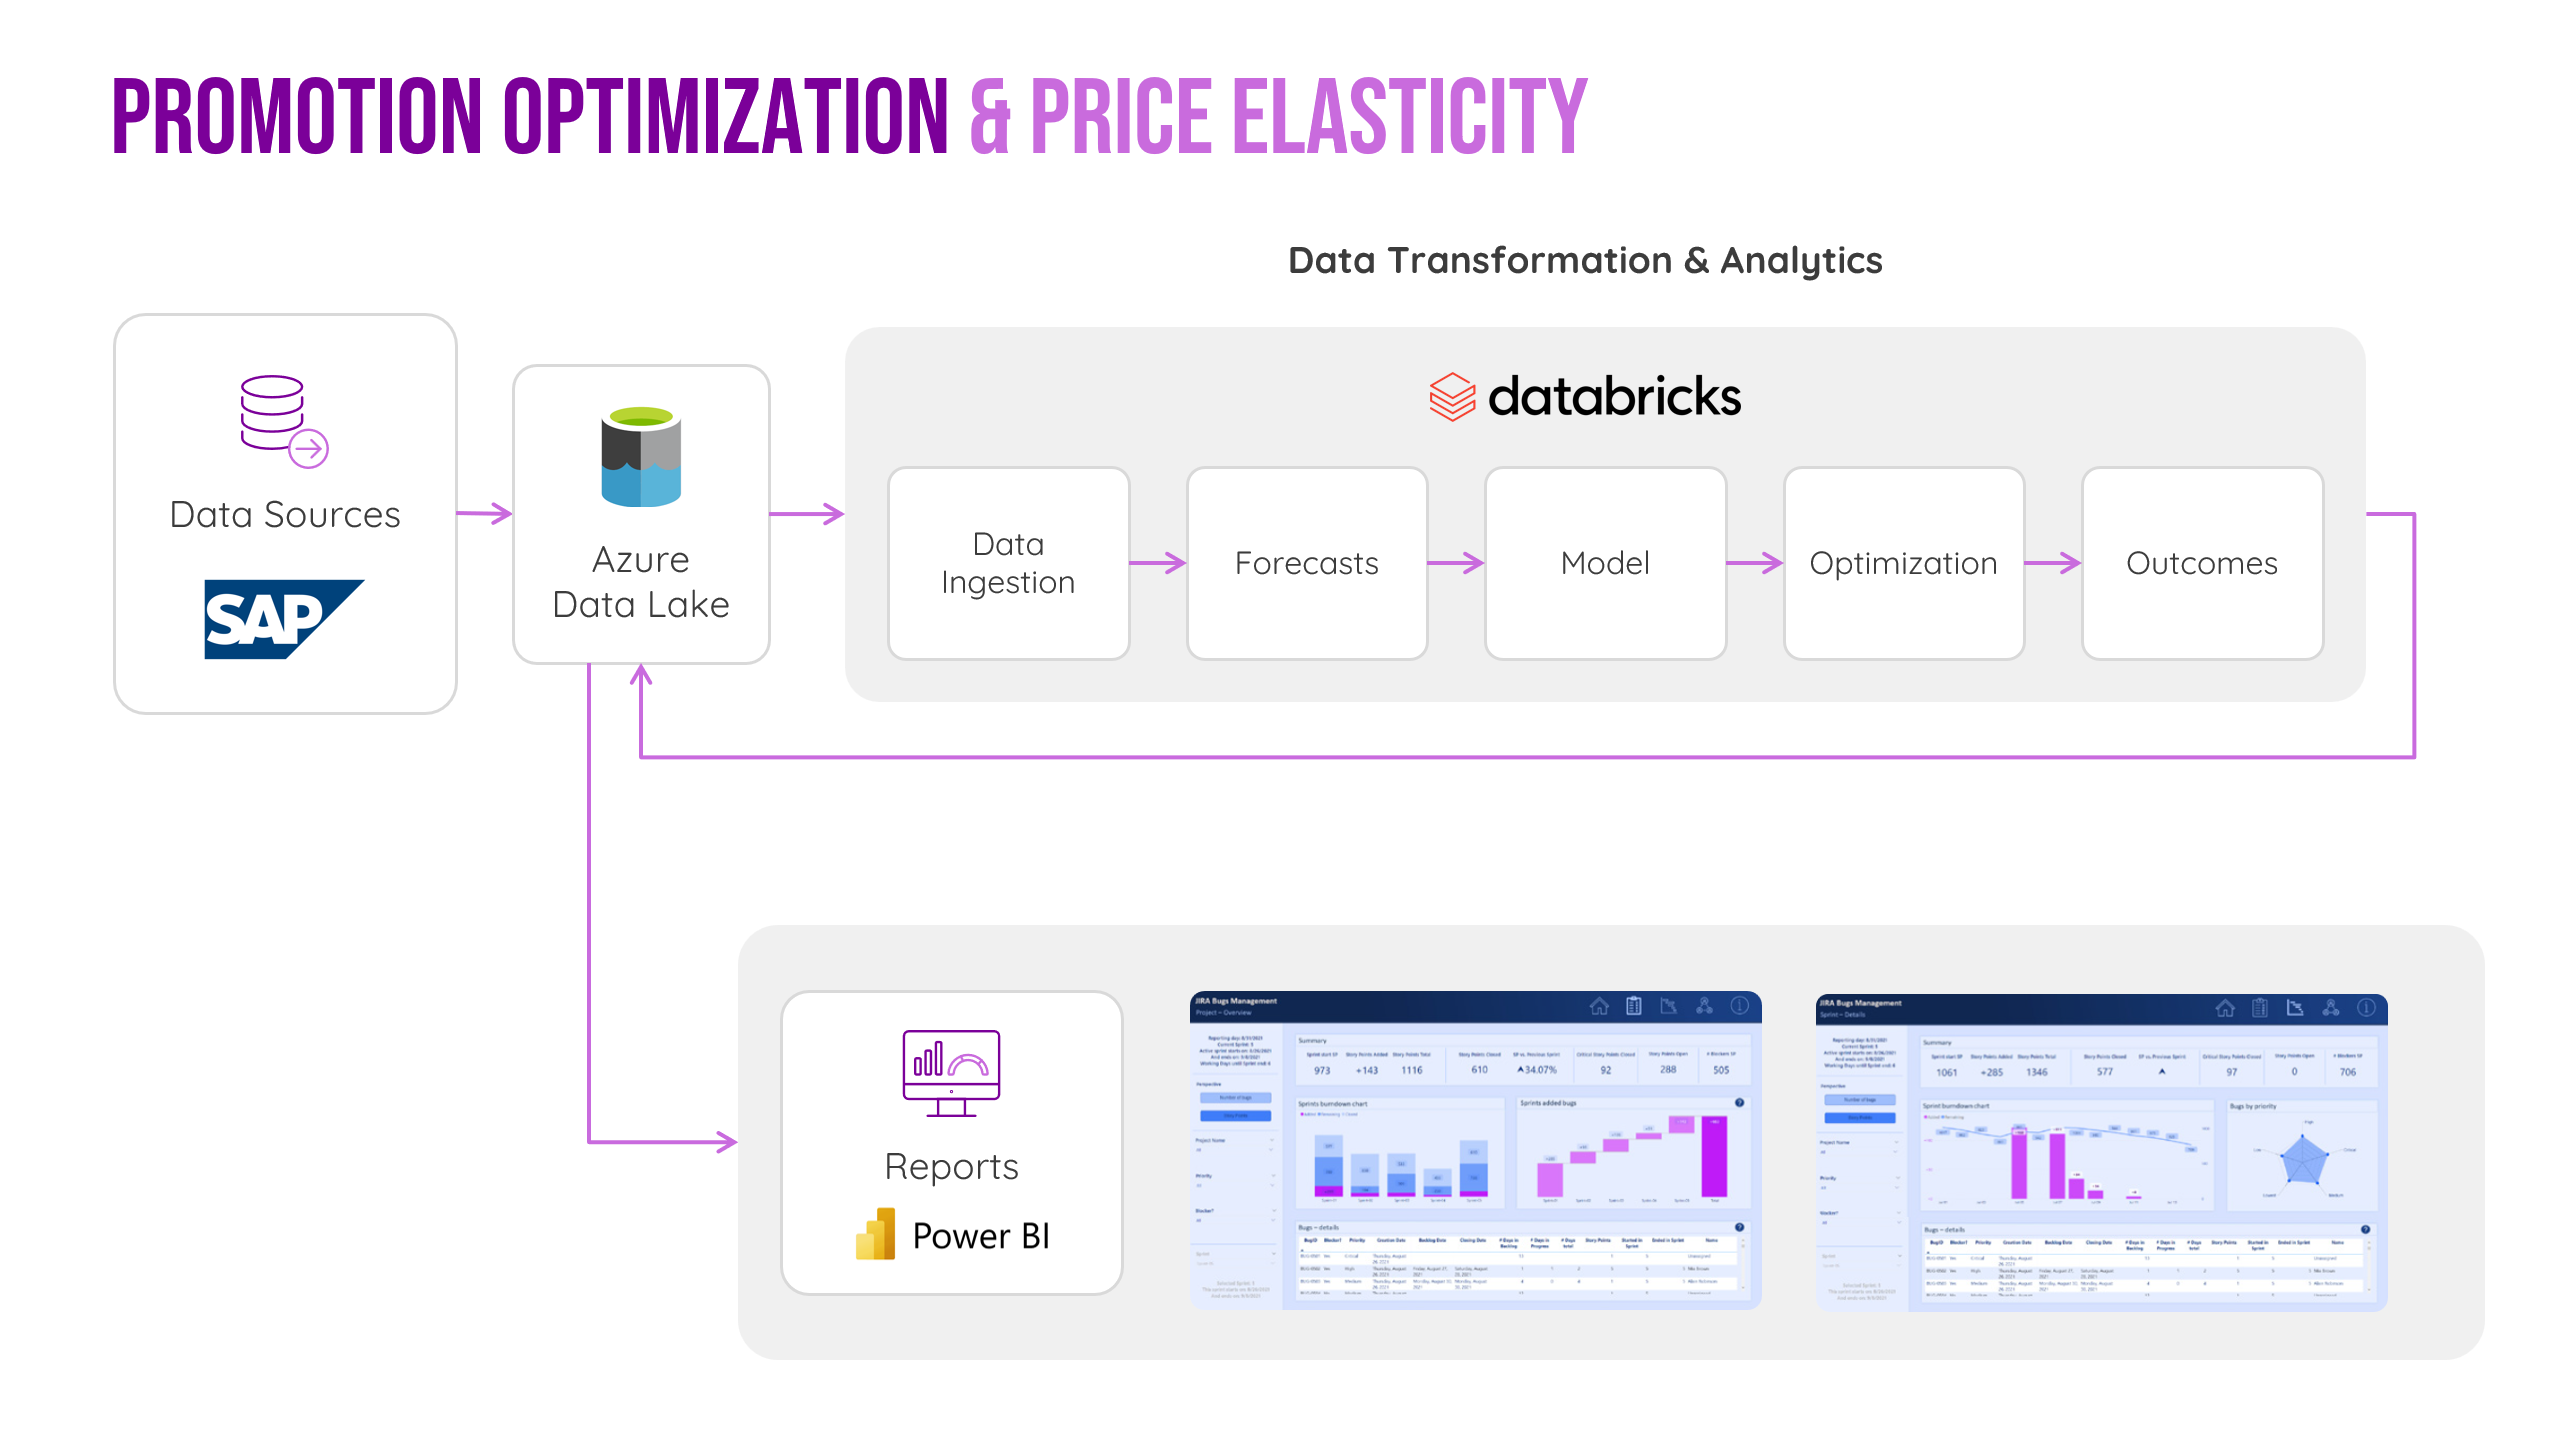 Illustration of promotion optimization and price flexibility